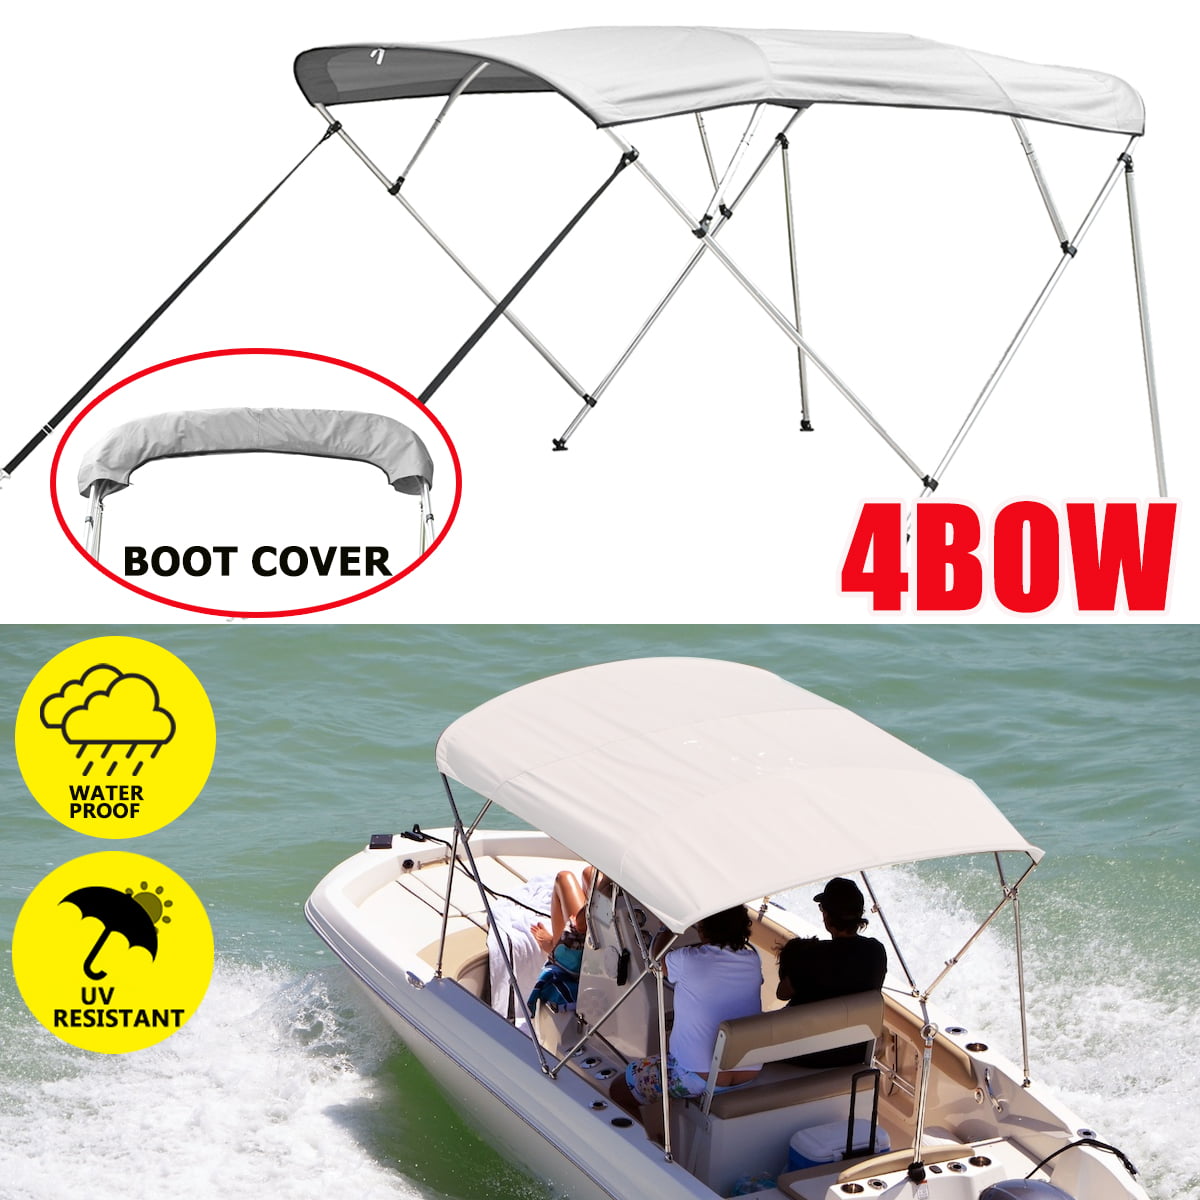 Boat Bimini Top Sun Canopy Cover Navy Blue 3 Bow 6 ft 4 Bow 8 ft Length 